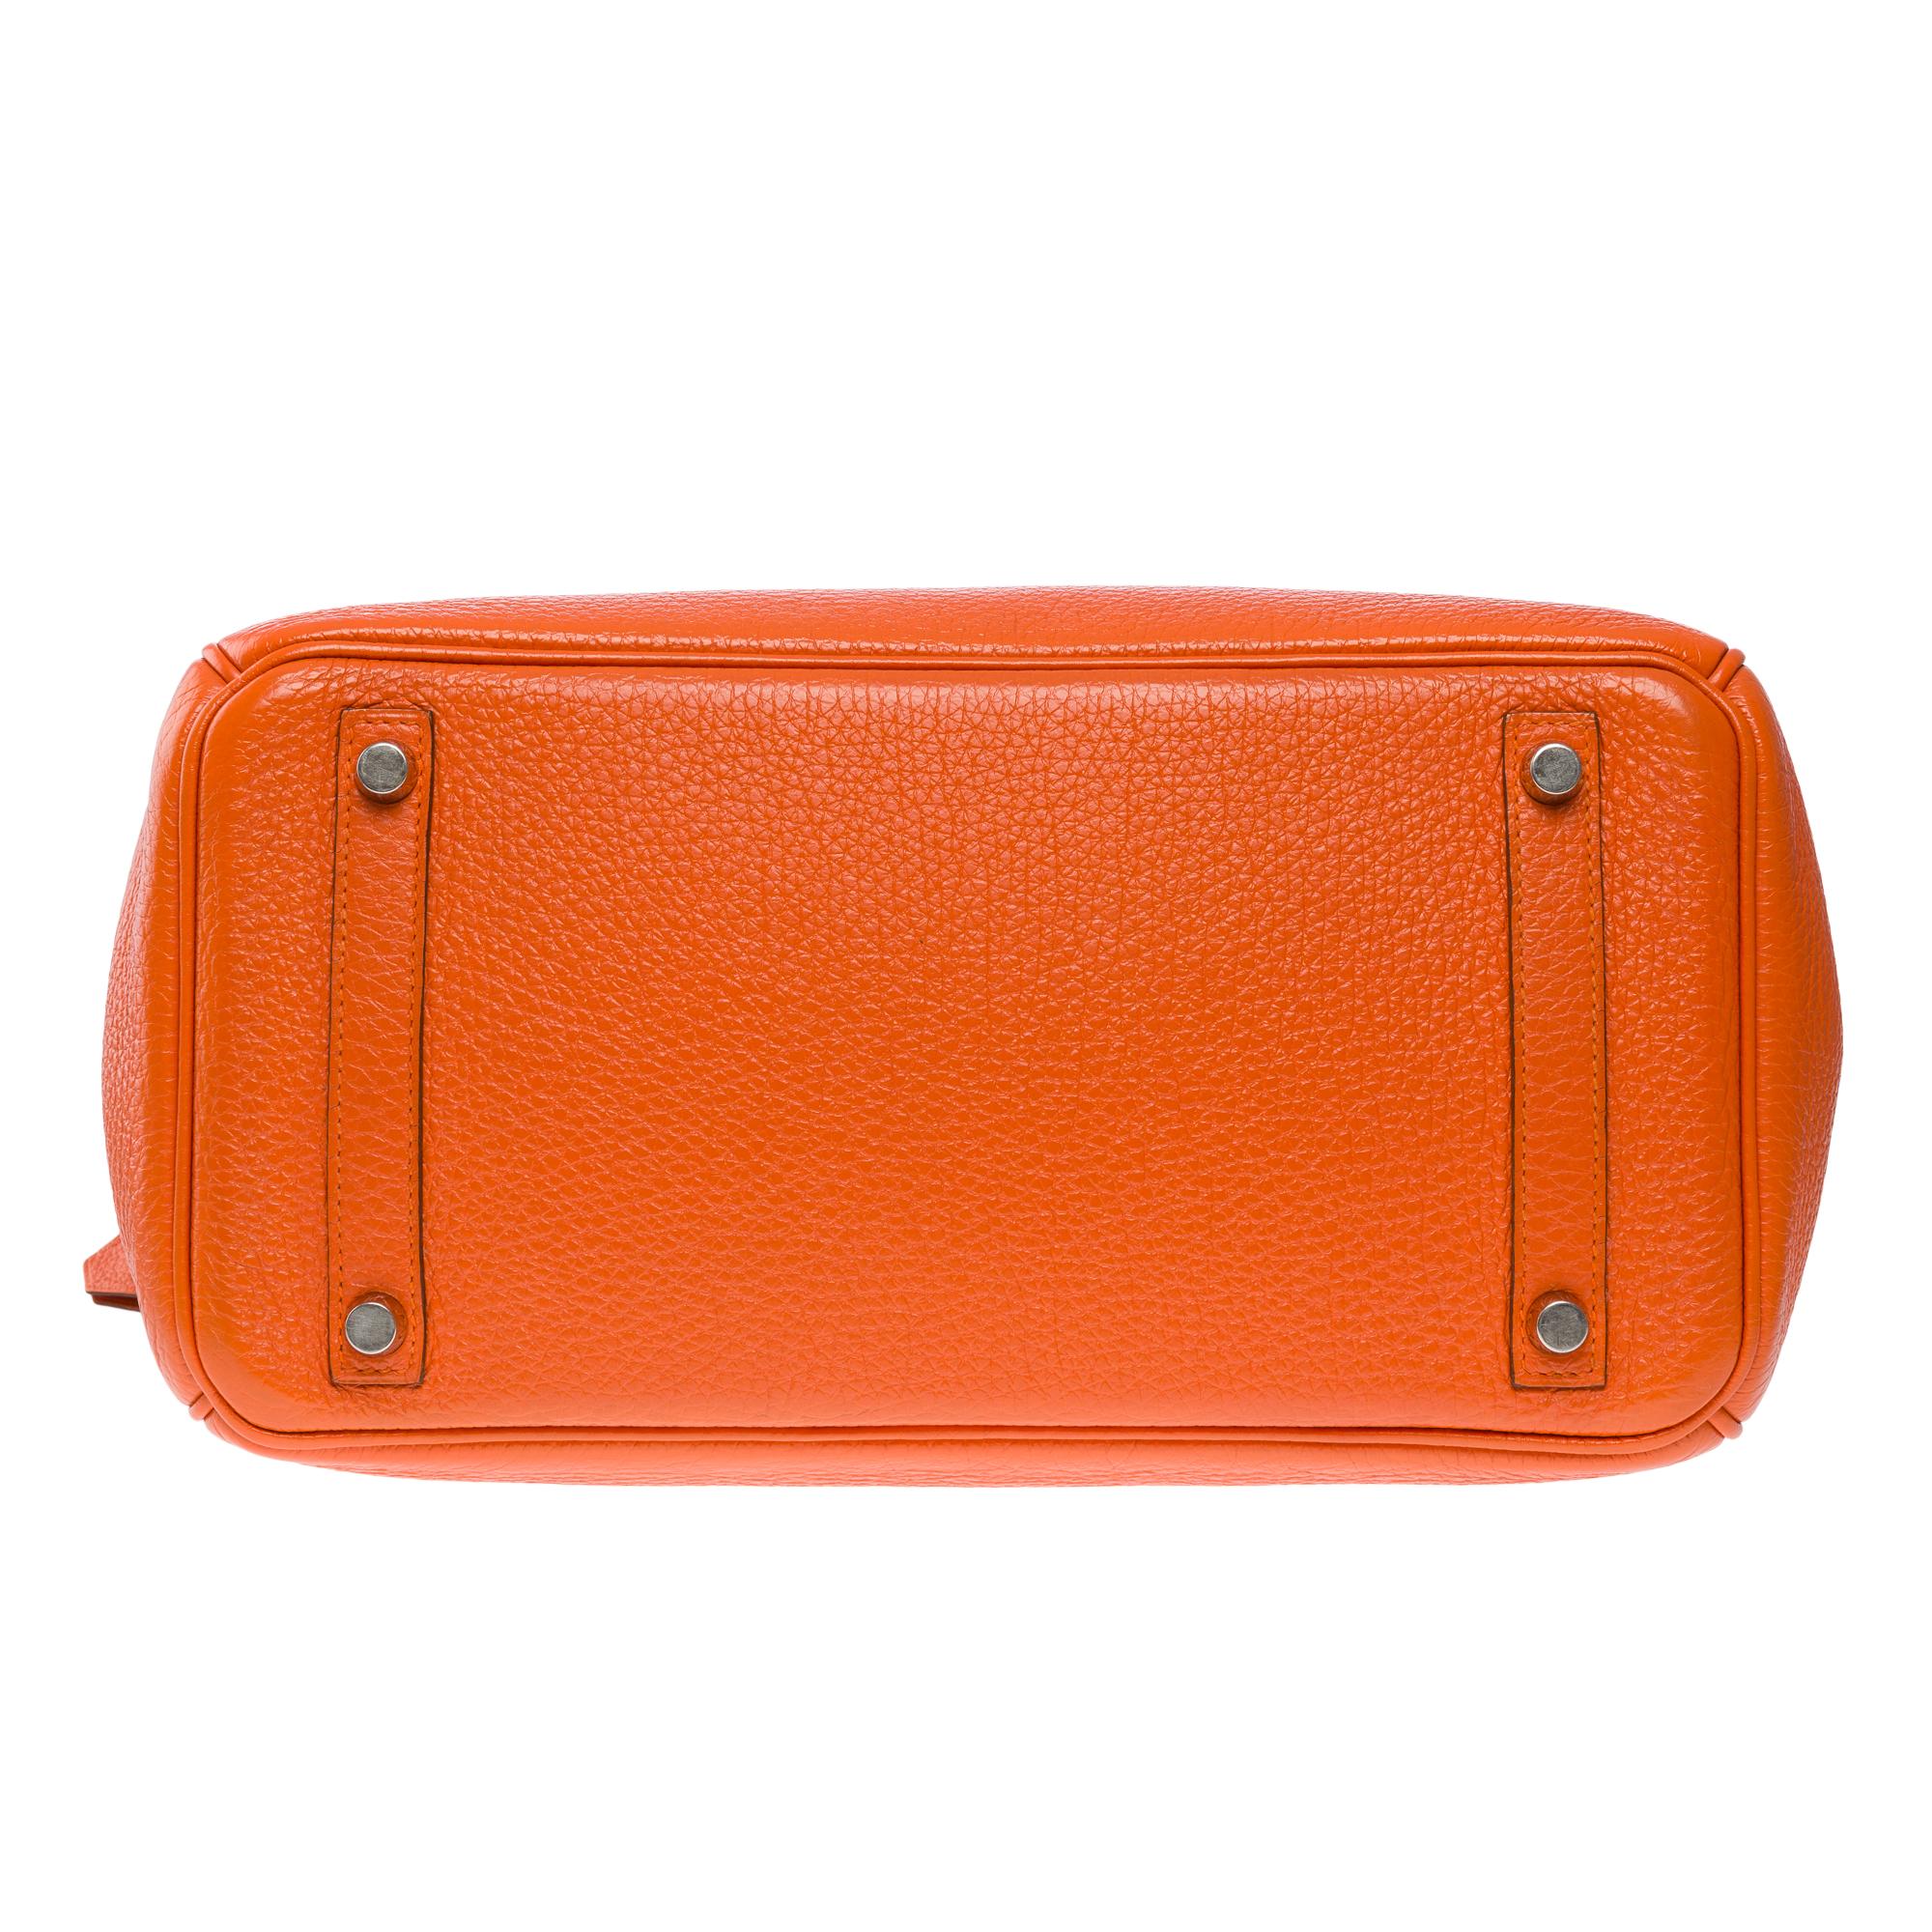 Amazing & Bright Hermès Birkin 30 handbag in Orange H Togo leather, SHW For Sale 6